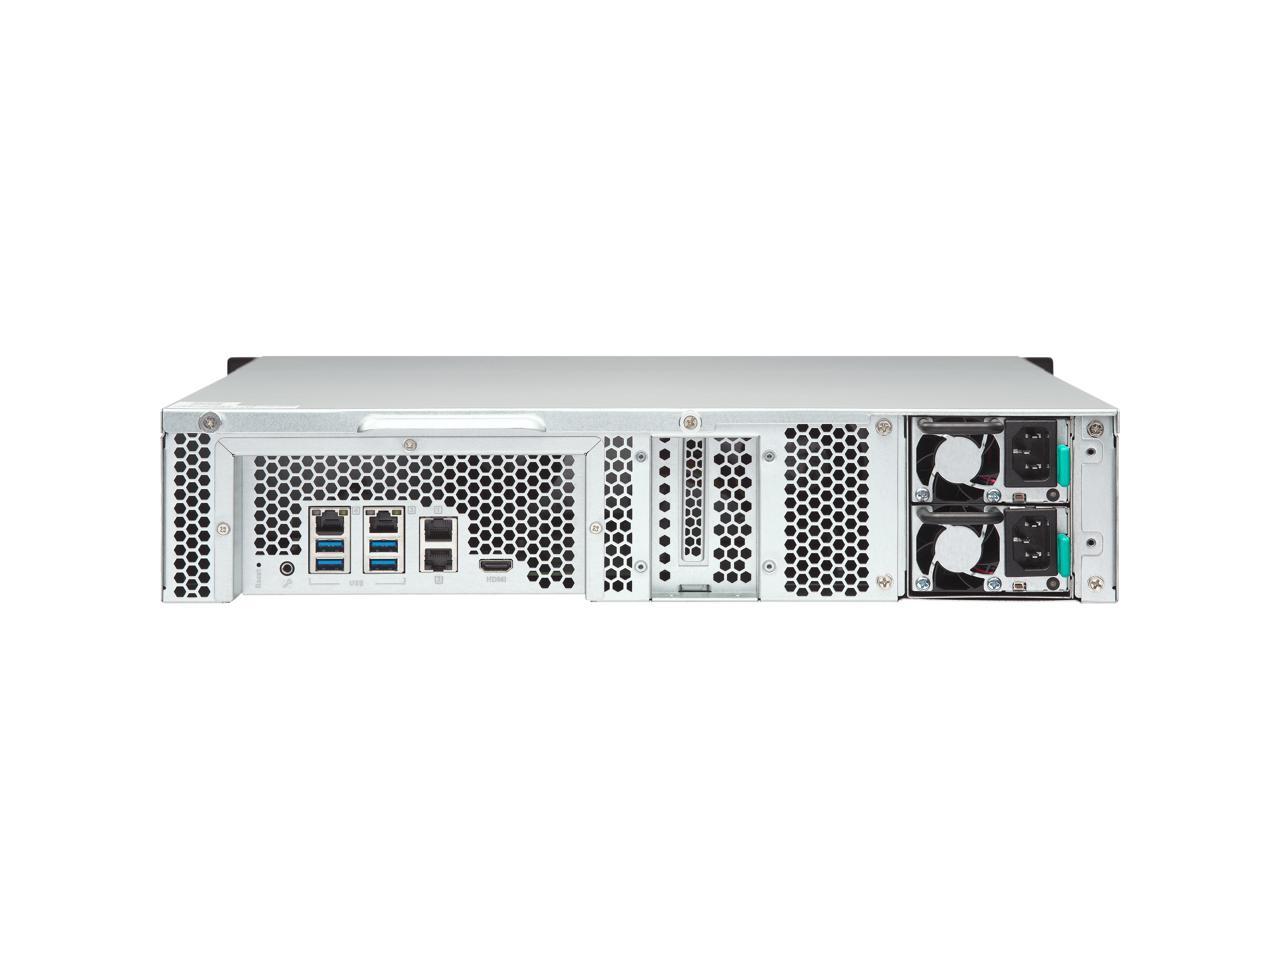 QNAP TS-853BU-RP-4G-US 2U 8-Bay NAS/iSCSI IP-SAN,10GbE-Ready, PCIe Expansion Slot, Redundant PSU